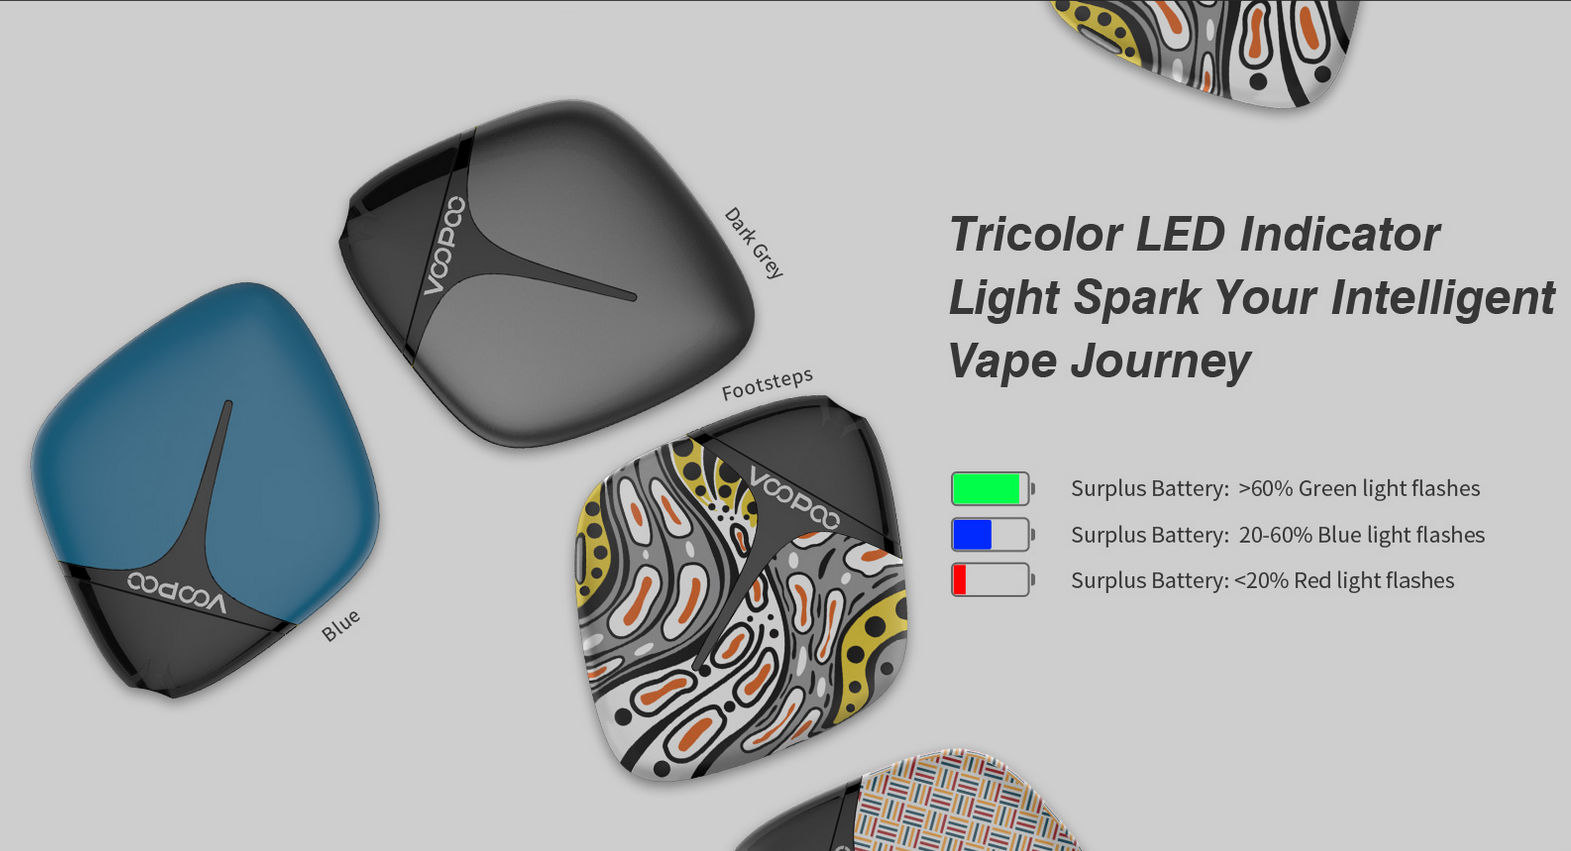 Tricolor LED Indicator Light Spark